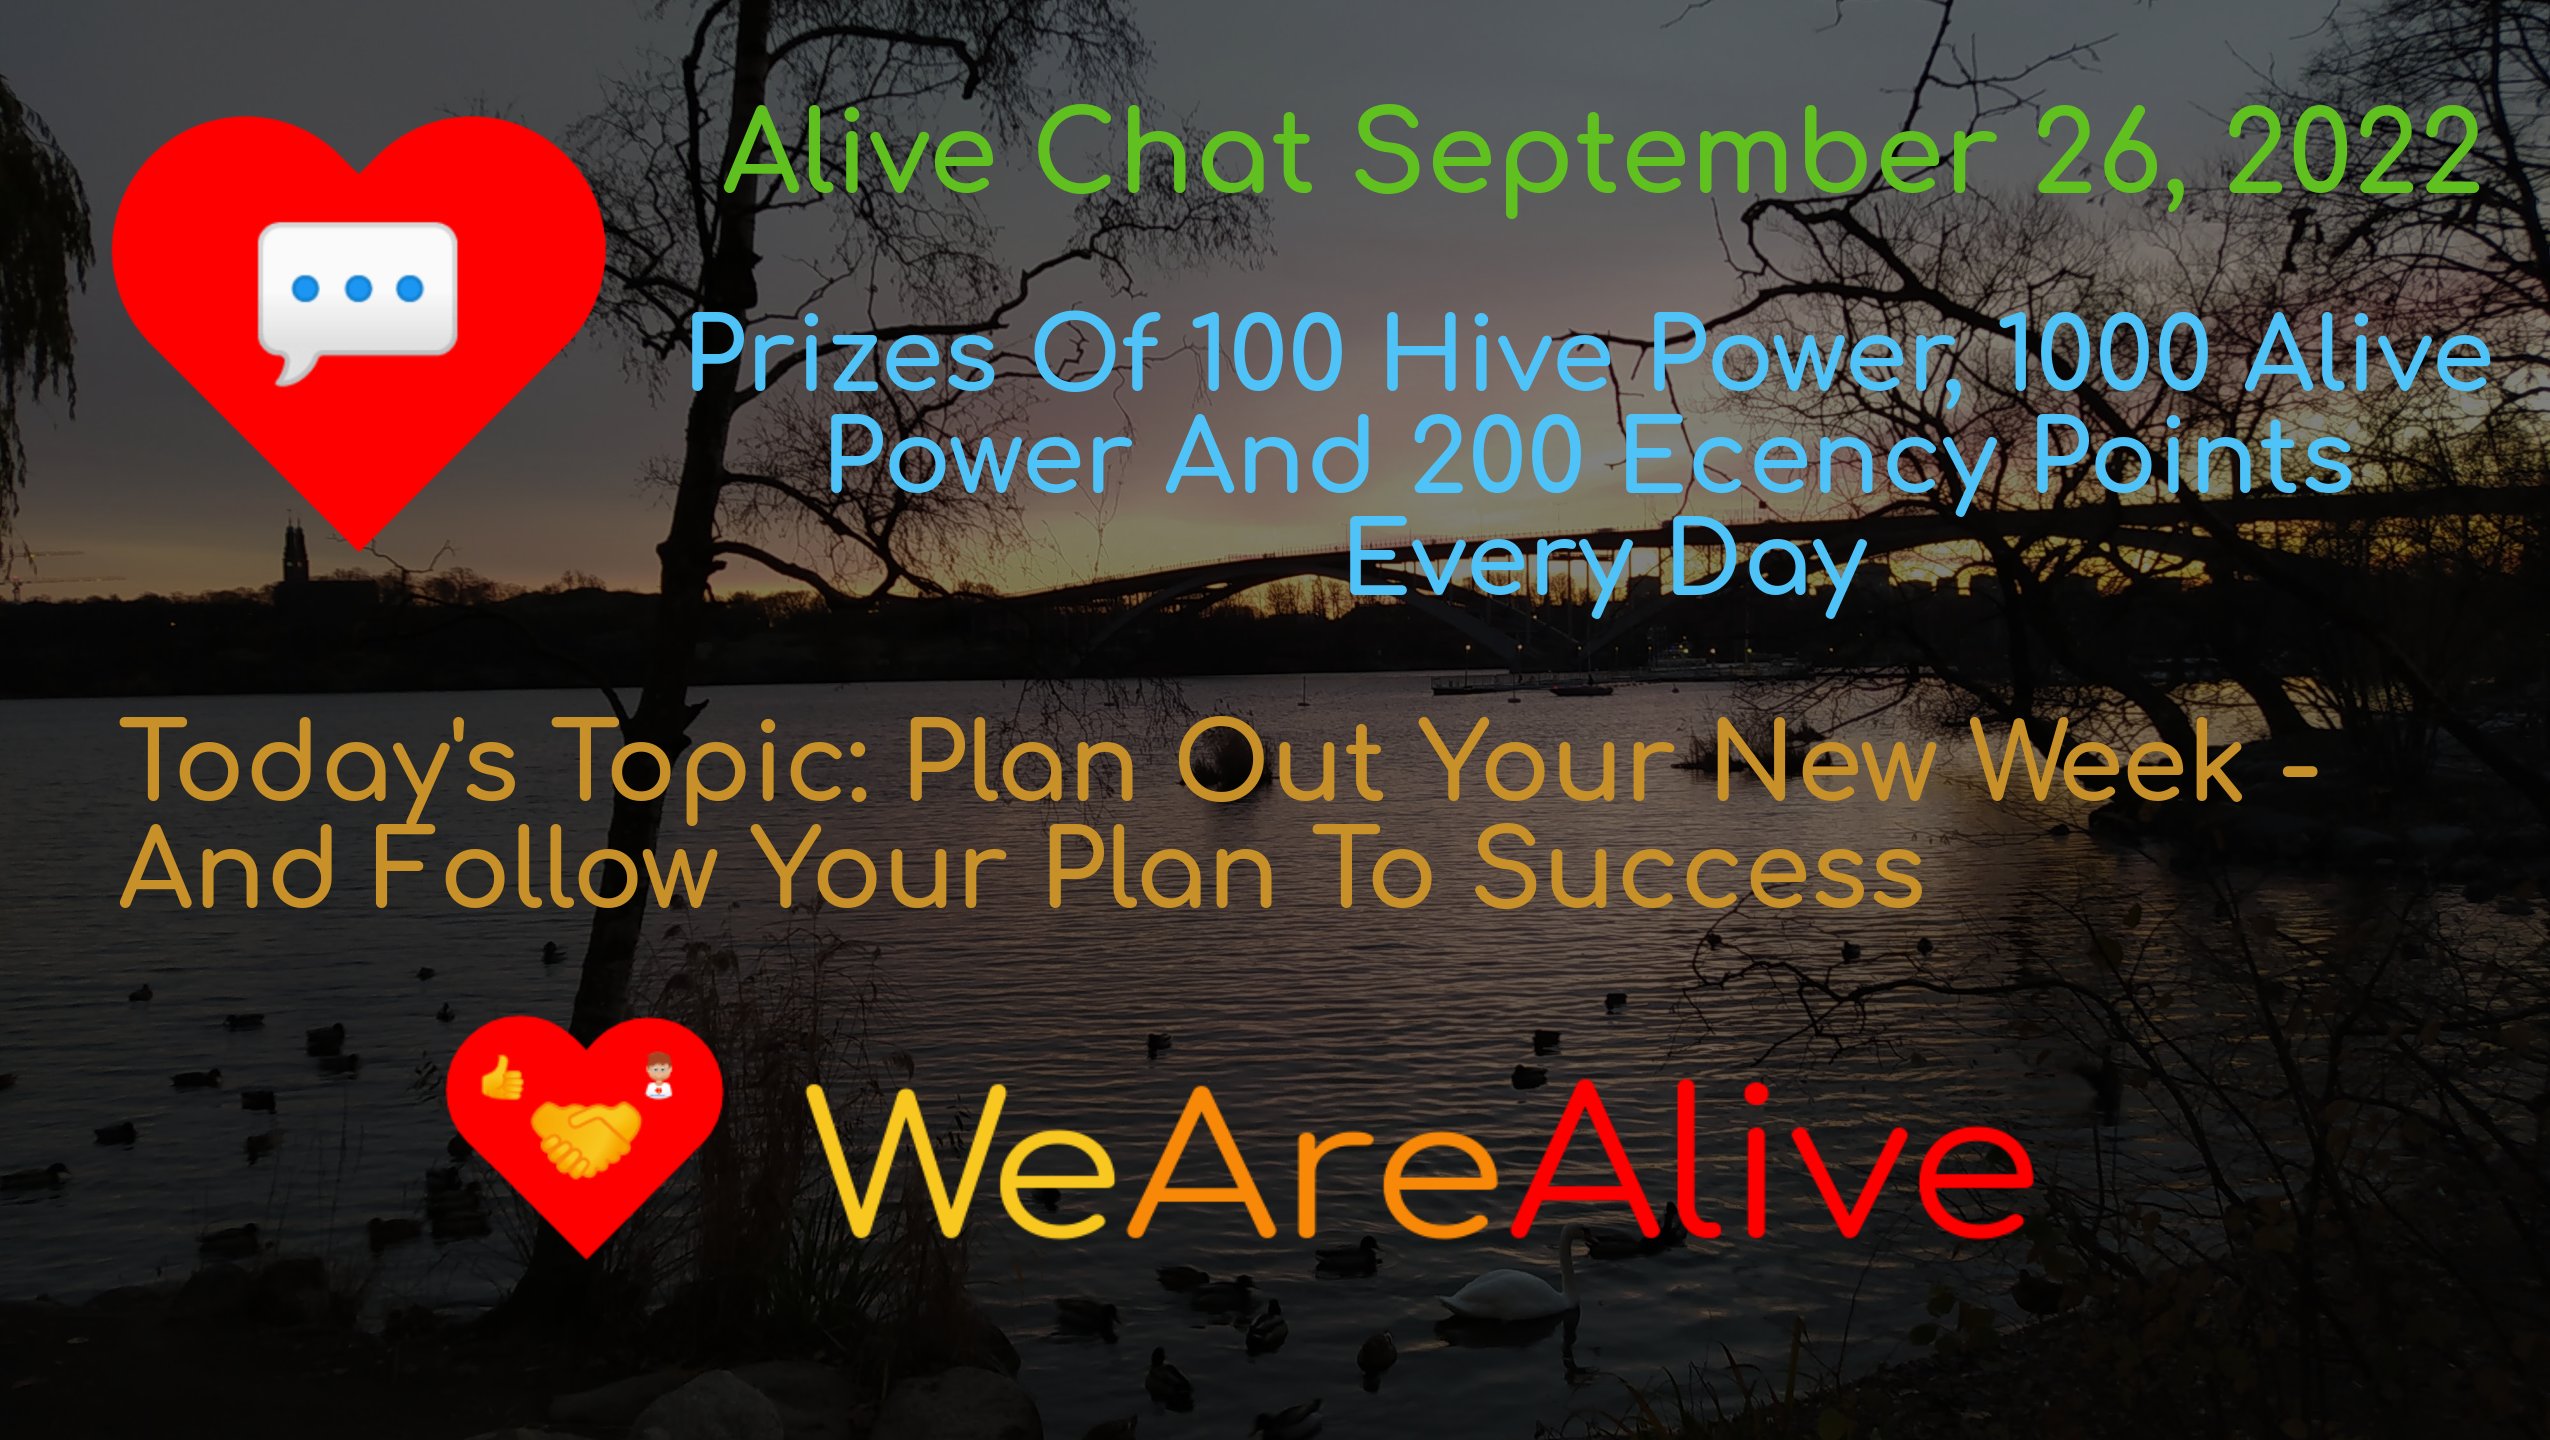 @alive.chat/alive-chat-september-26-2022